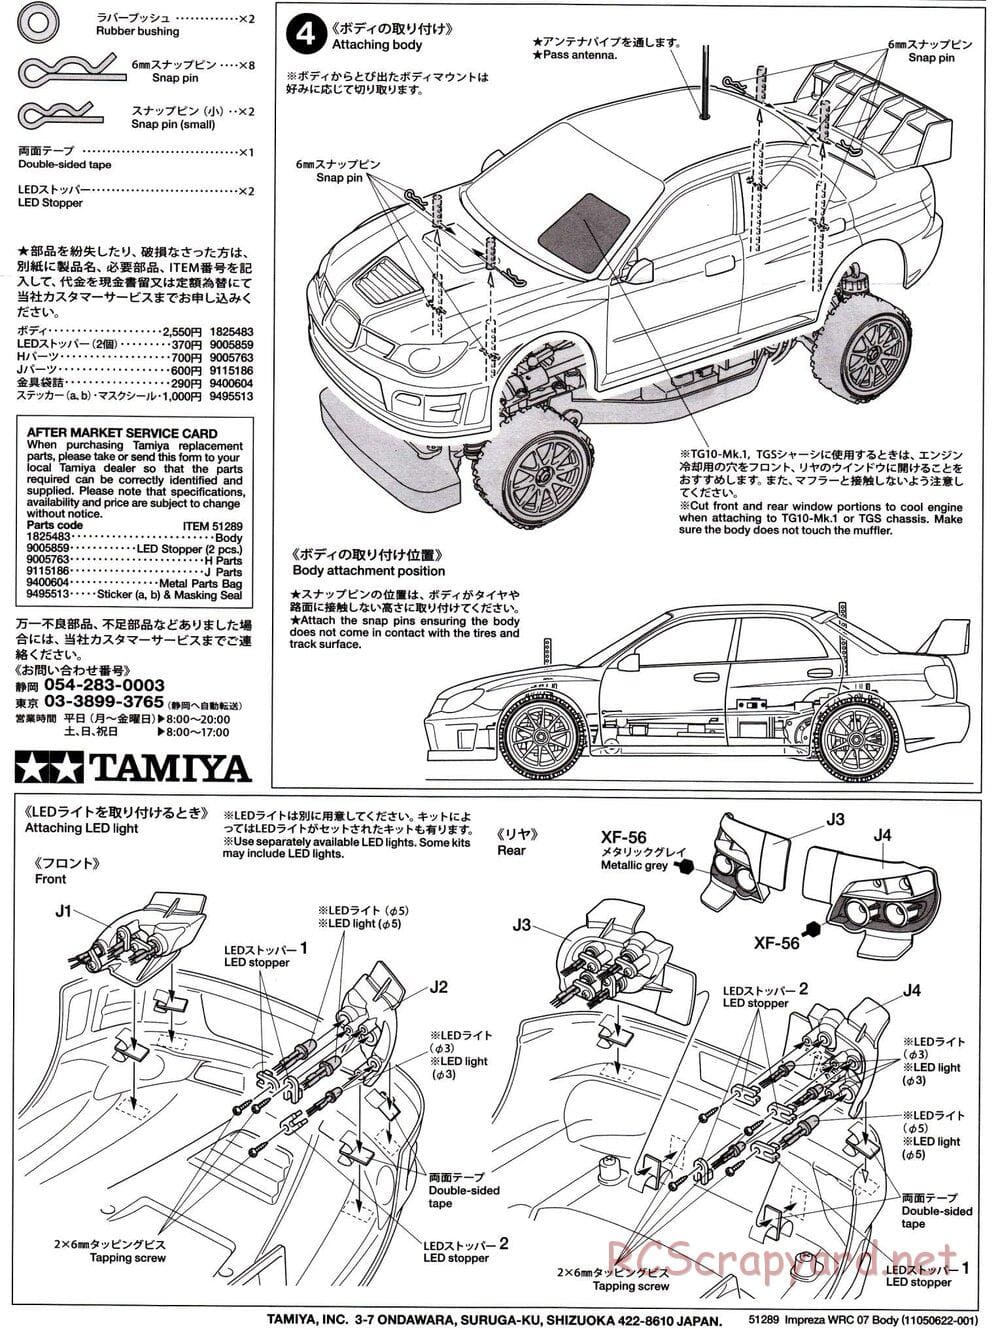 Tamiya - Subaru Impreza WRC Monte Carlo 07 - DF-03Ra Chassis - Body Manual - Page 4